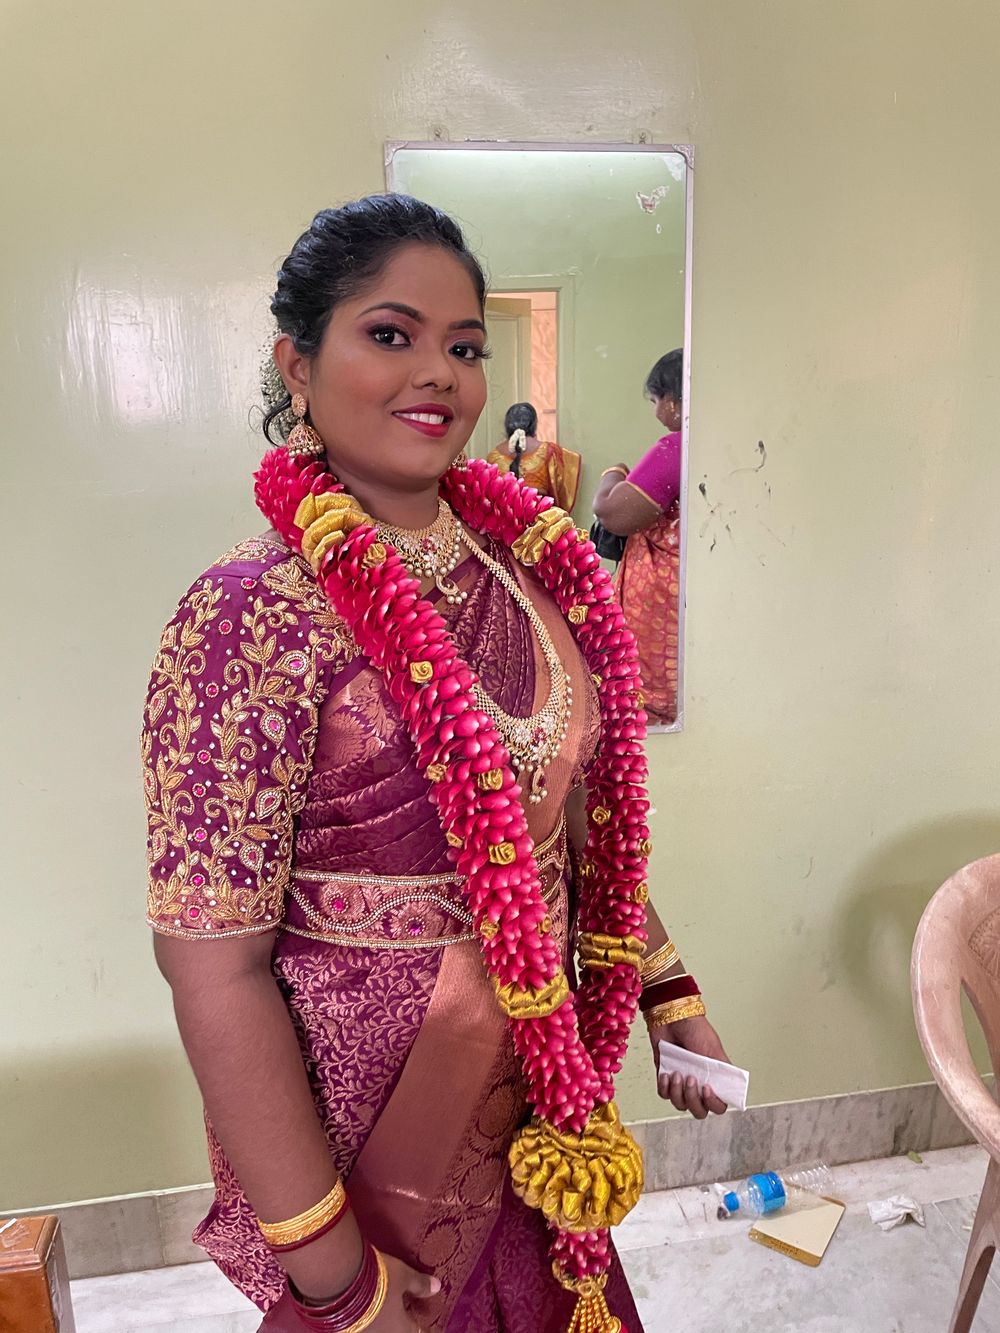 Photo From Christian Wedding - By Priya's Bridal Makeover